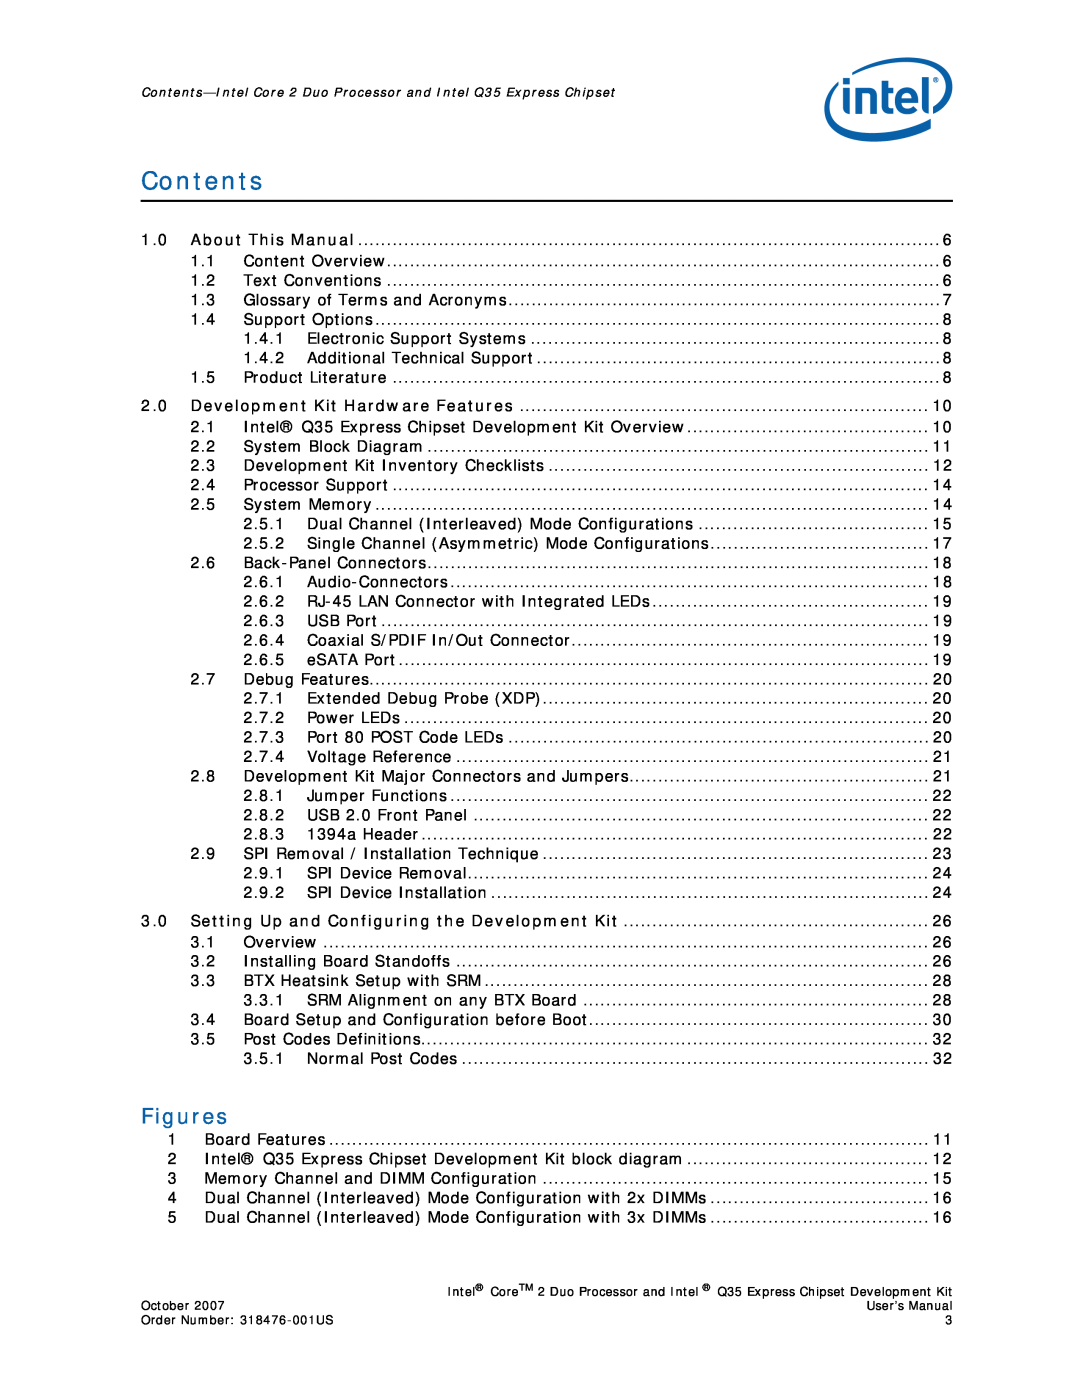 Intel Q35 Express, Core 2 Duo user manual Contents, Figures 